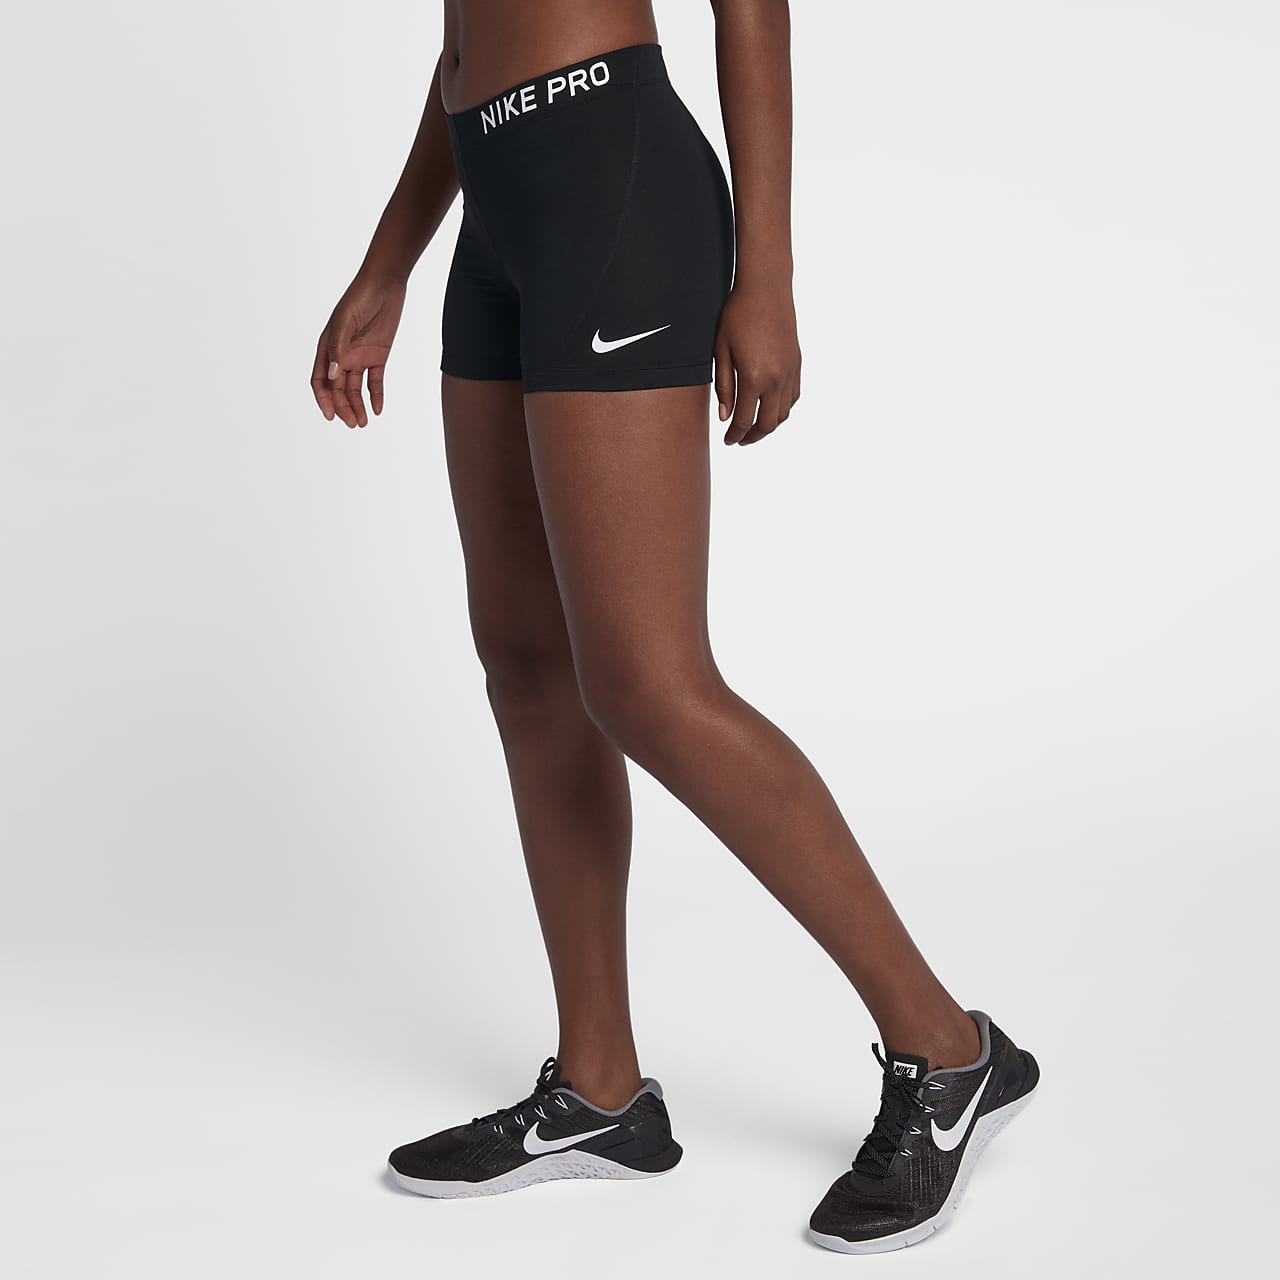 Nike Pro Women's Shorts. Nike SG